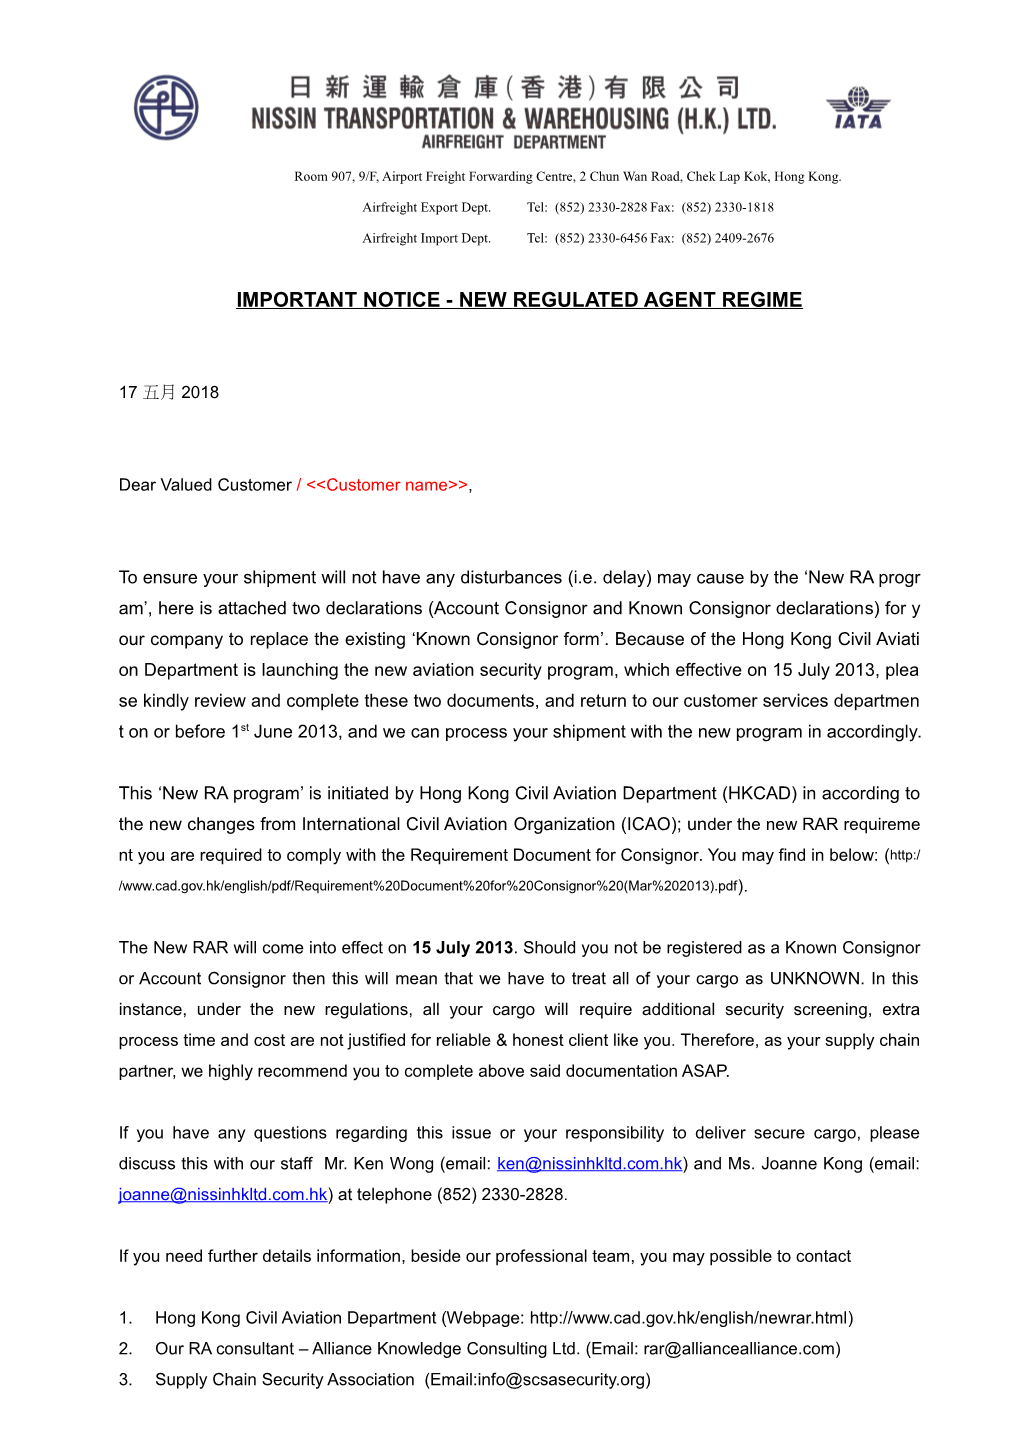 Important Notice - New Regulated Agent Regime